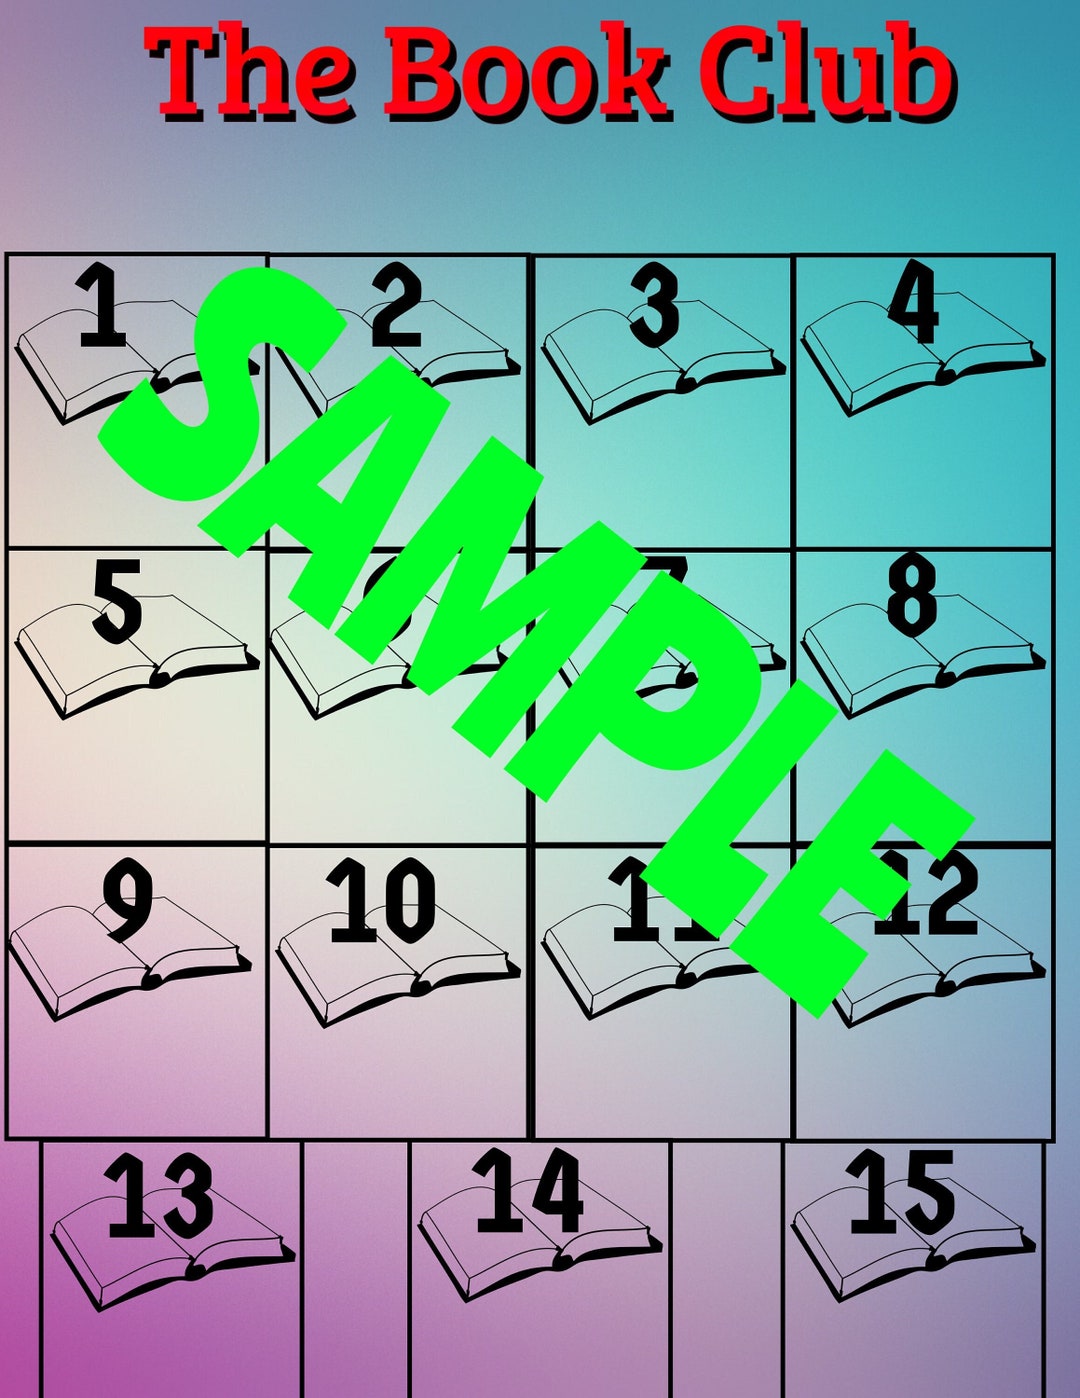 bingo-template-bingo-squares-1-15-bingo-board-etsy